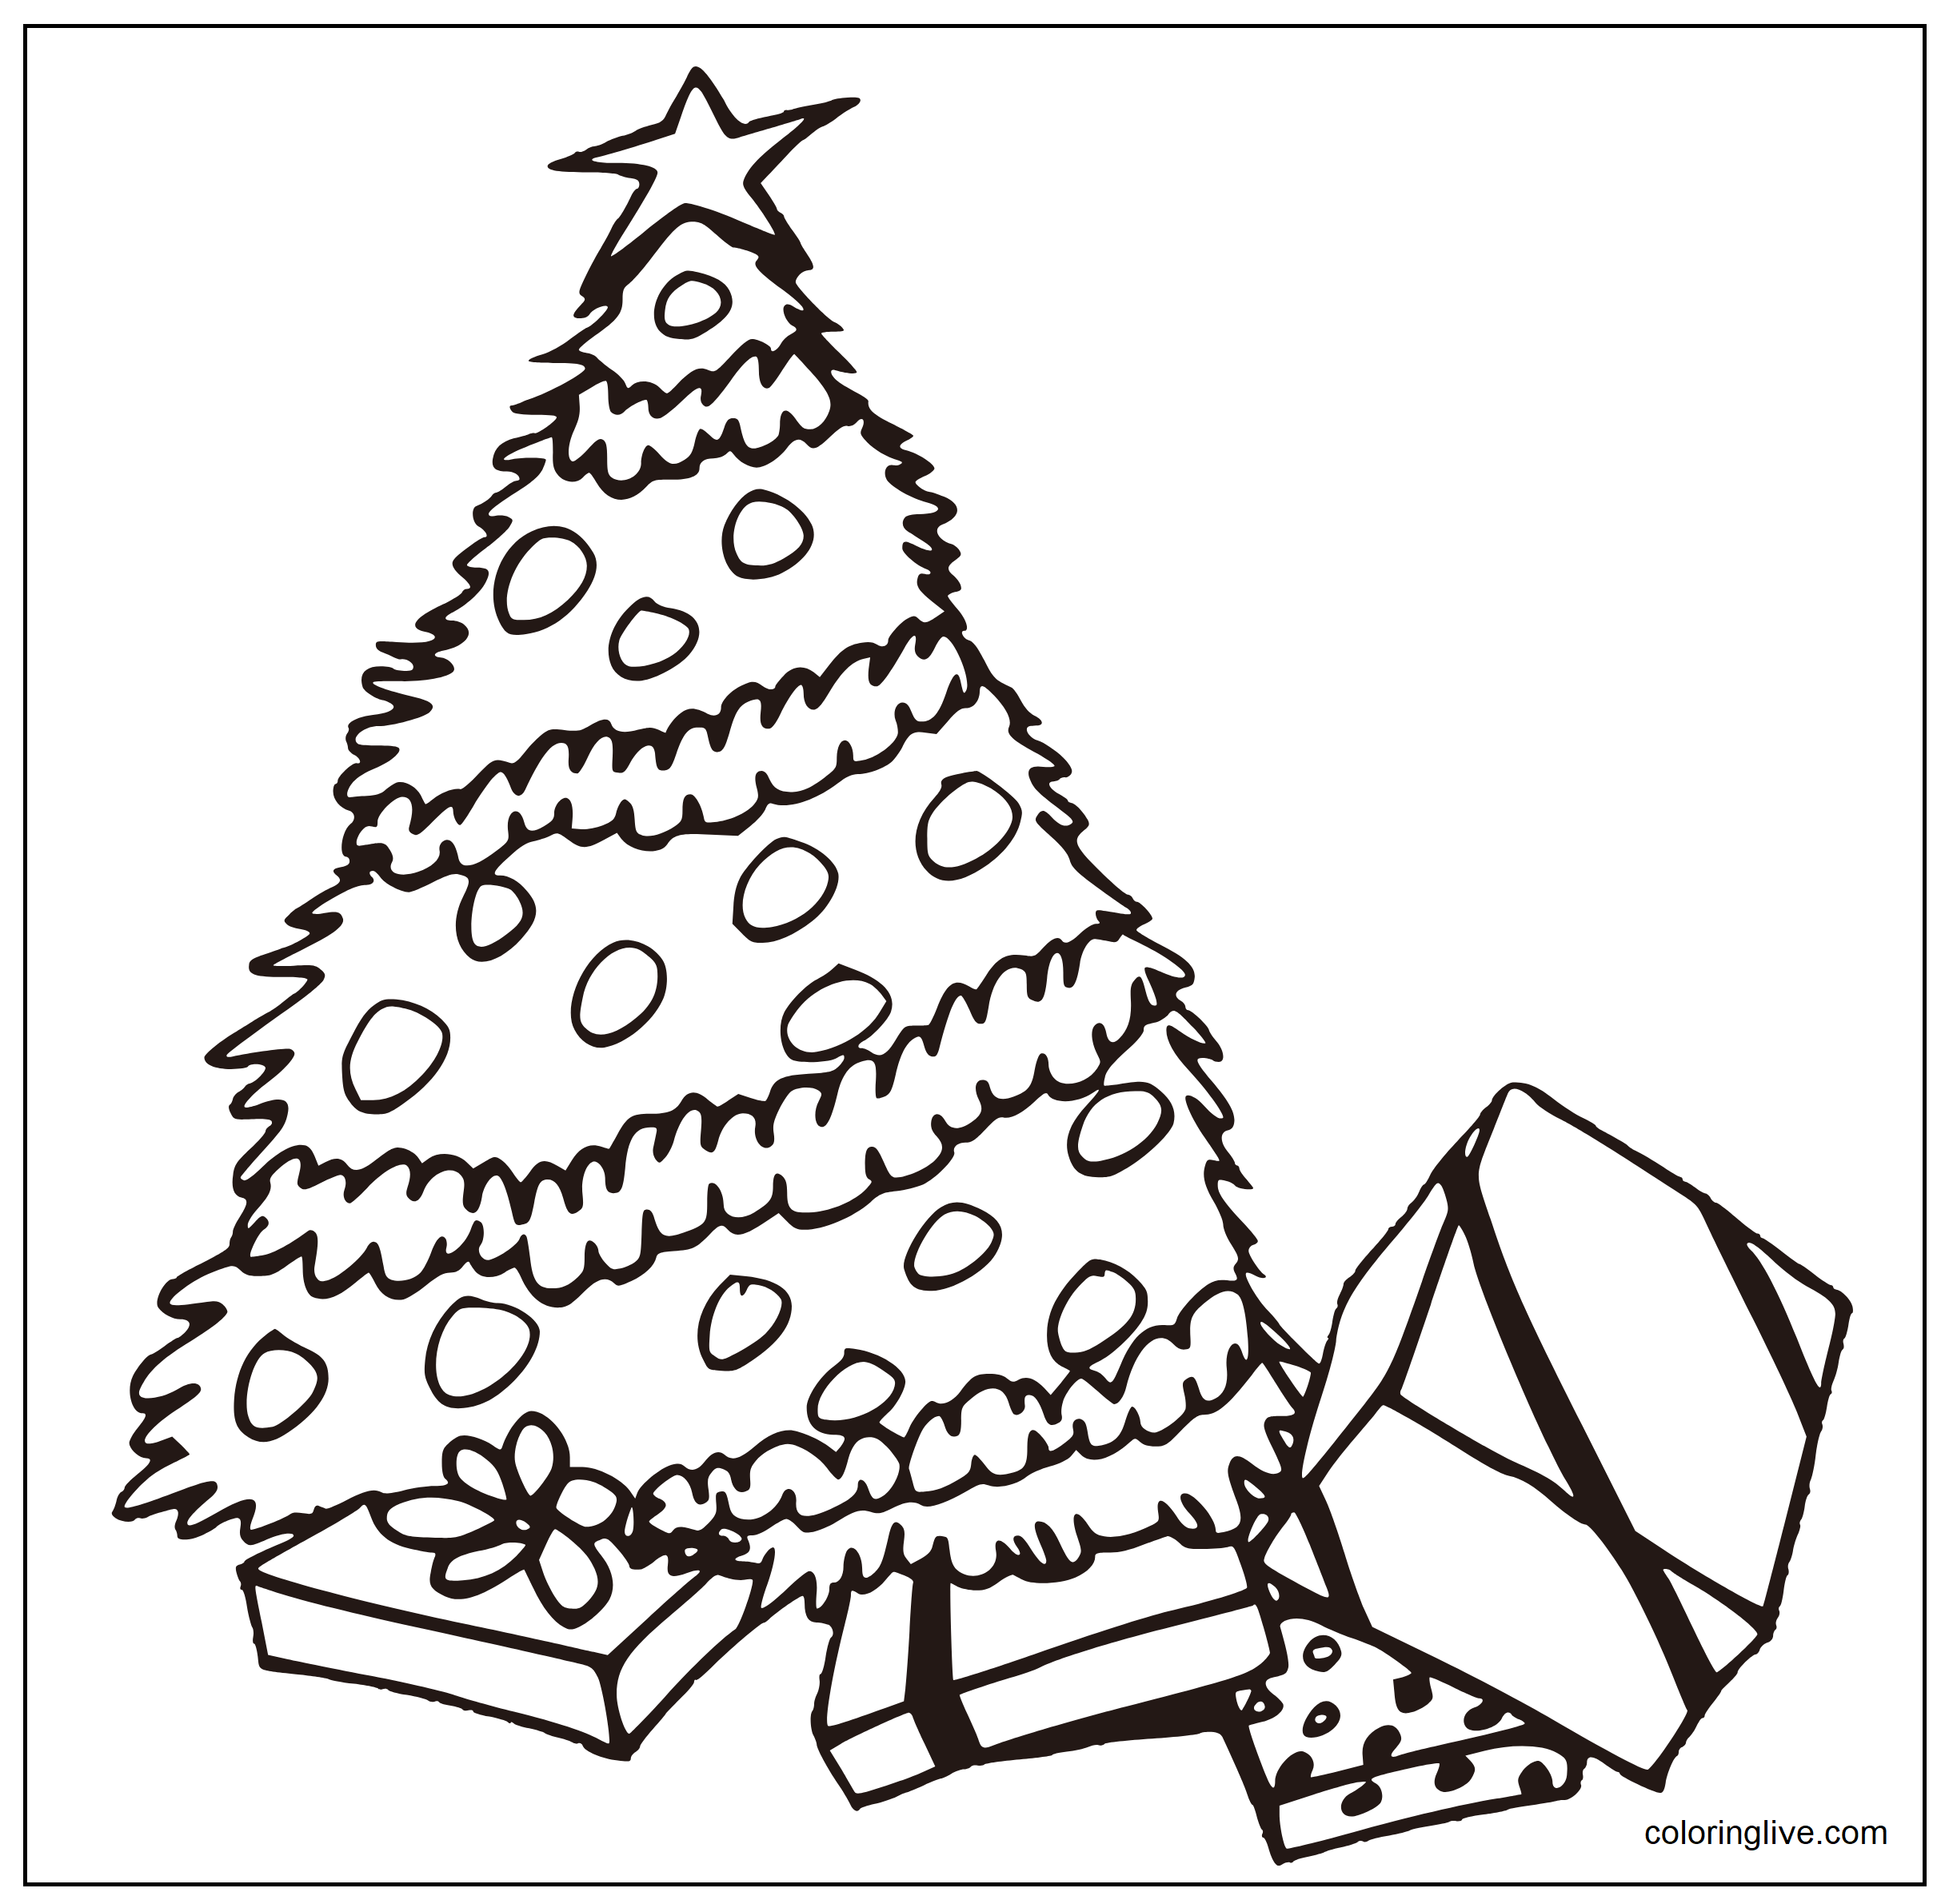 Printable Christmas tree and gifts Coloring Page for kids.